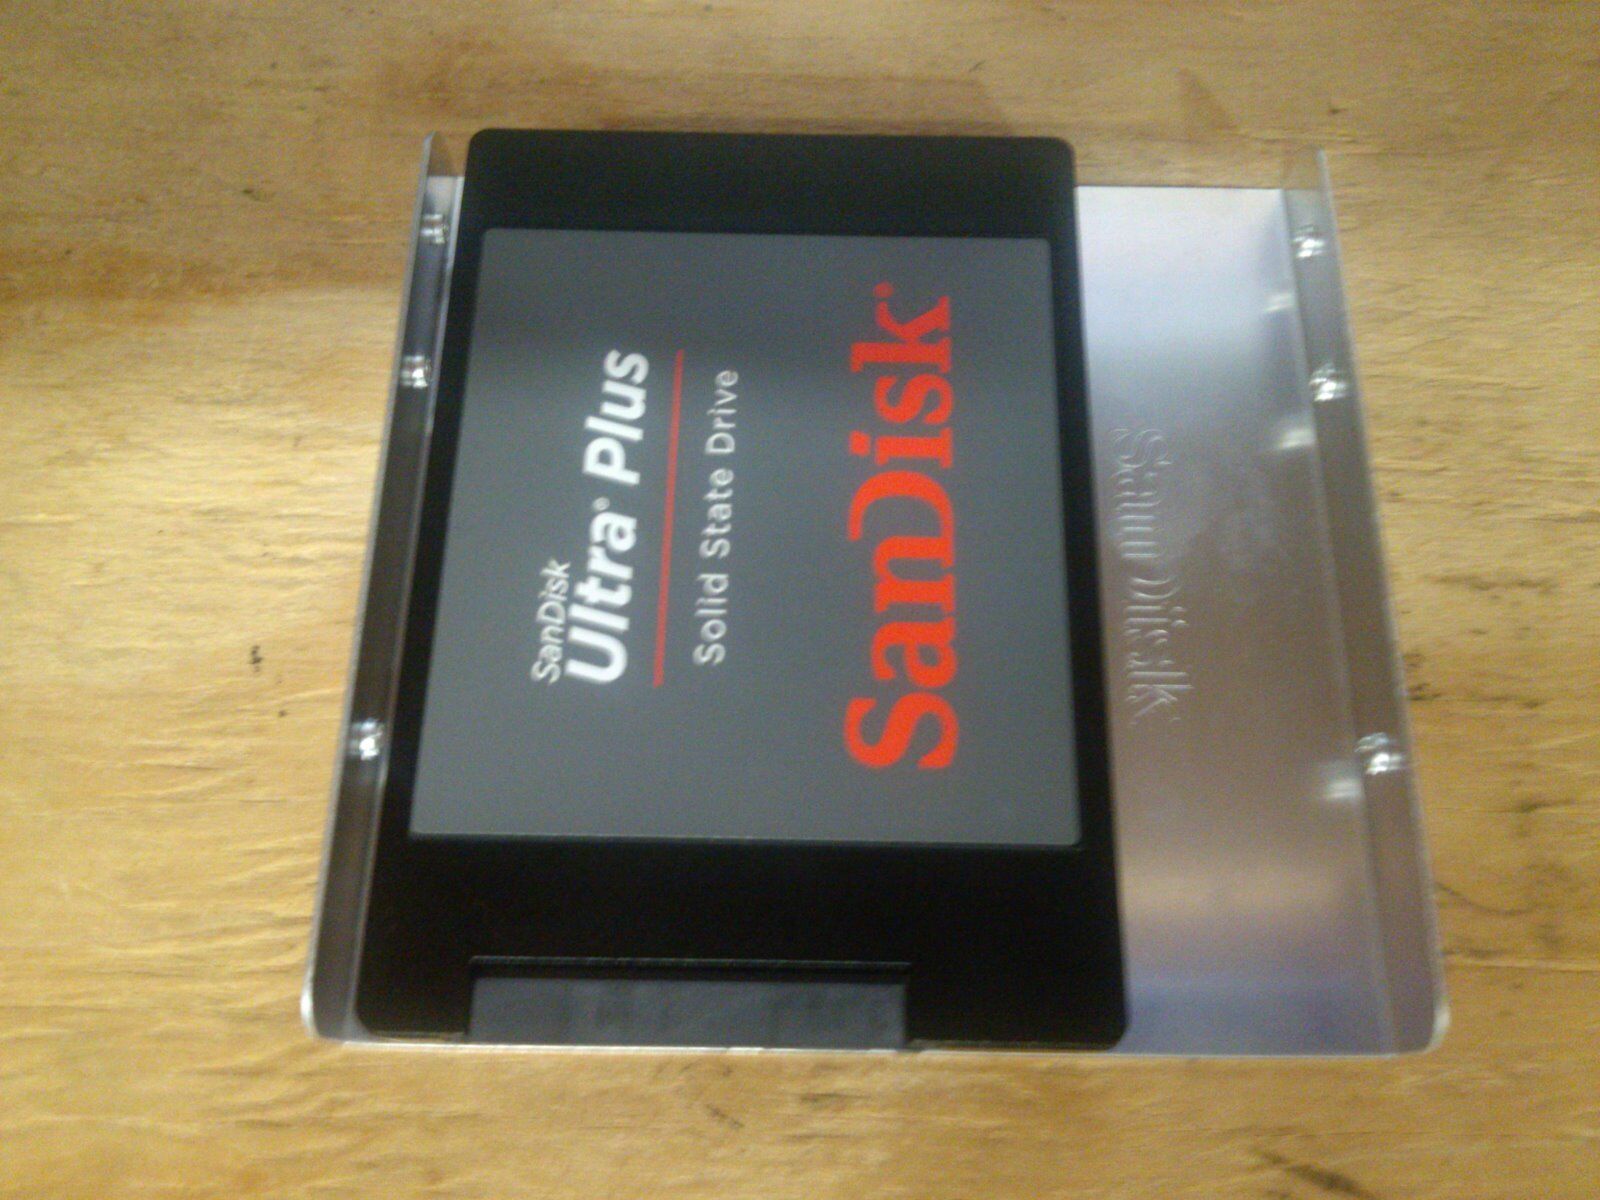 SANDISK Internal SSD Solid State Drive 64GB SDSSDP-064G 2.5